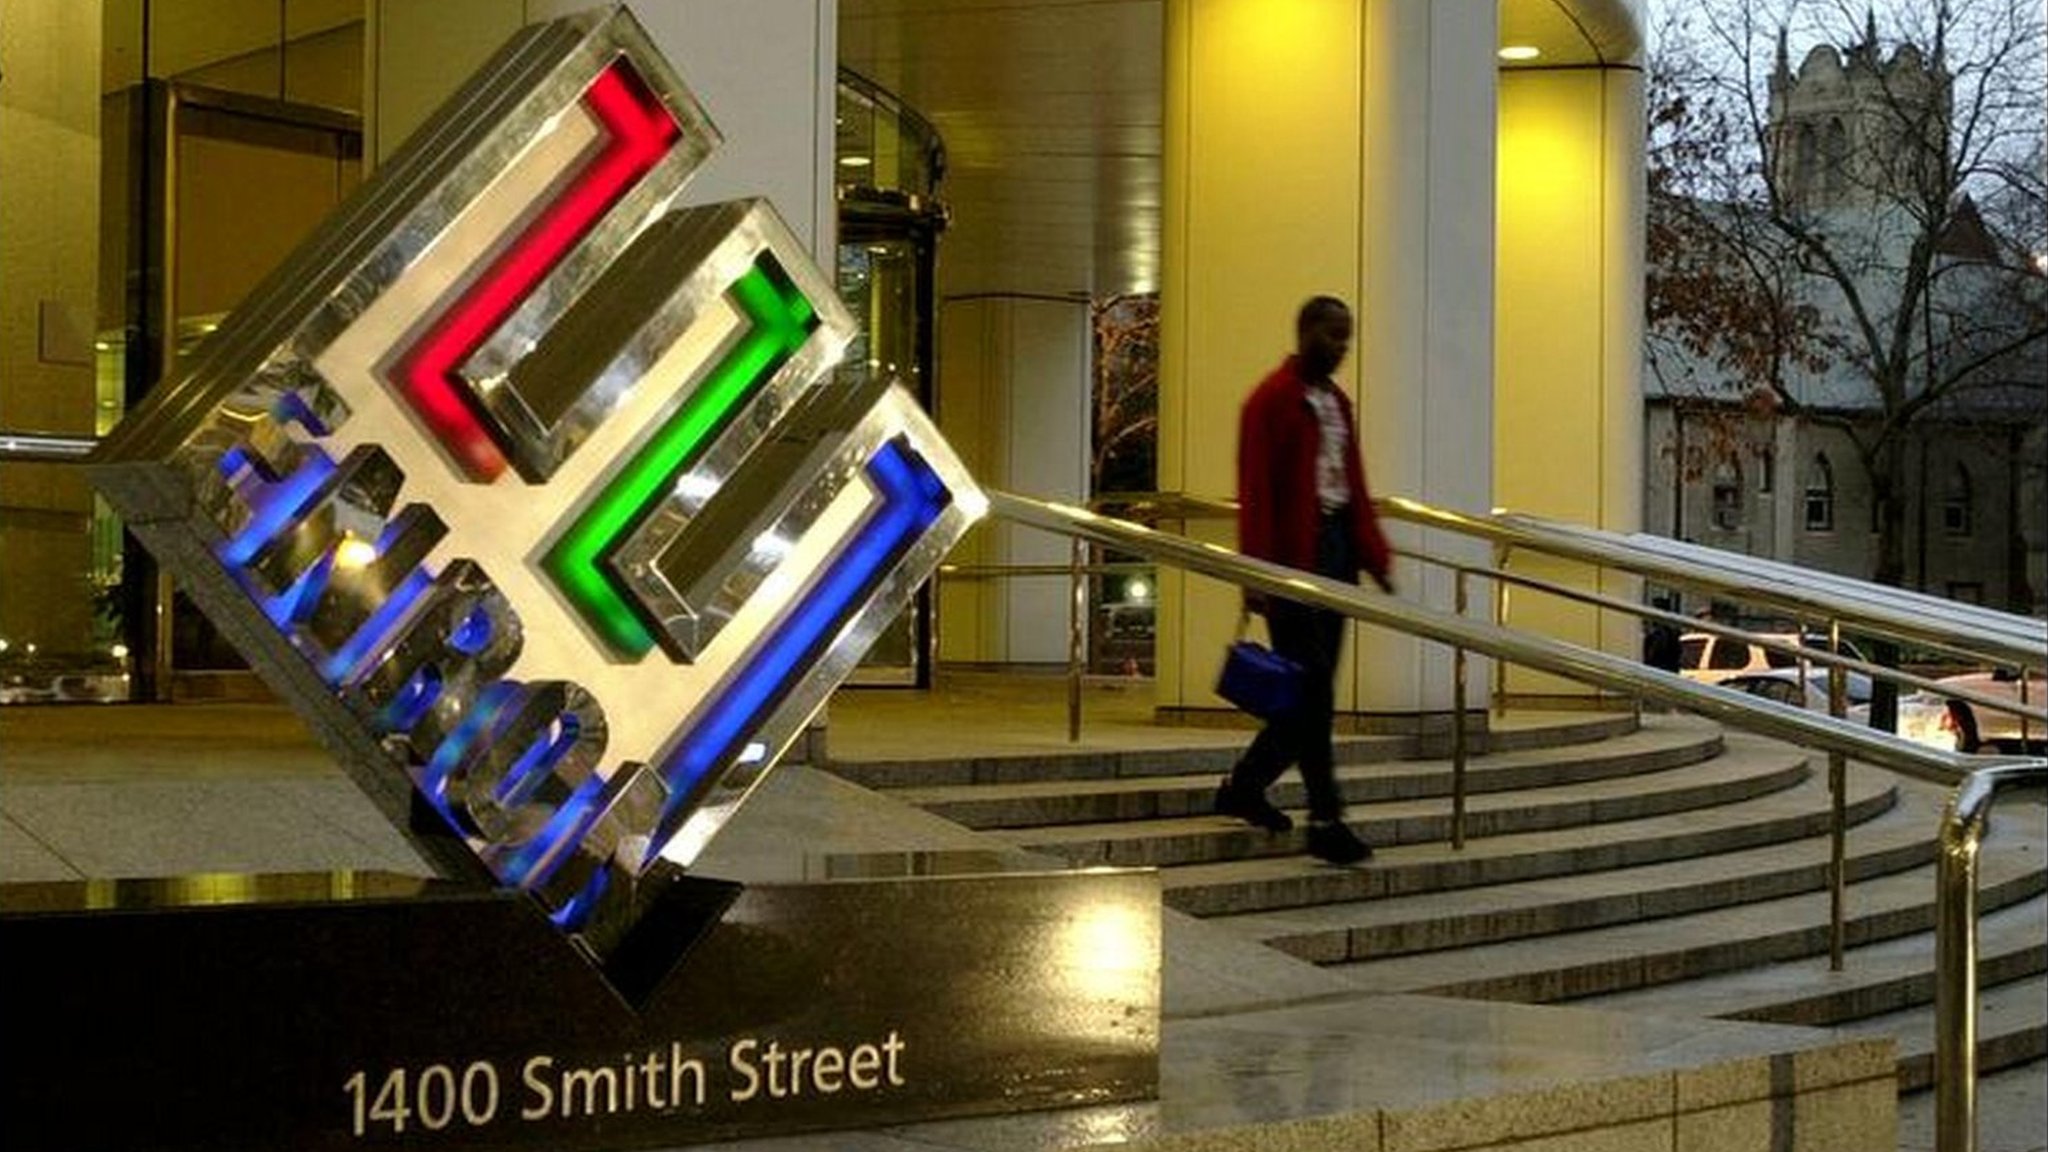 Companies still bending finance rules, Enron boss warns - BBC News